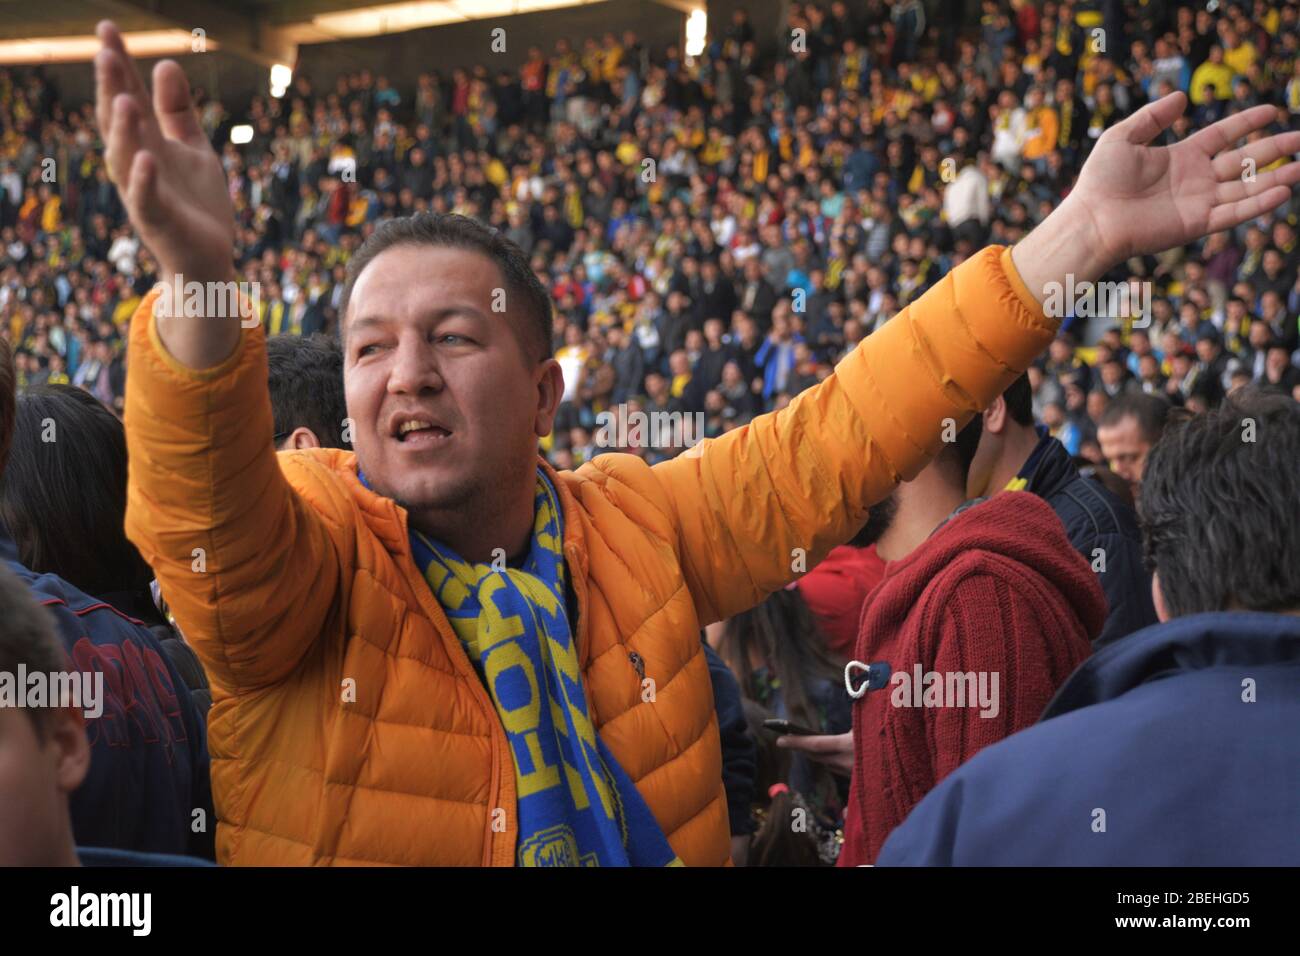 Ankara/Turkey - 05.03.2017 :A football fan in happiness cheering other fans Stock Photo